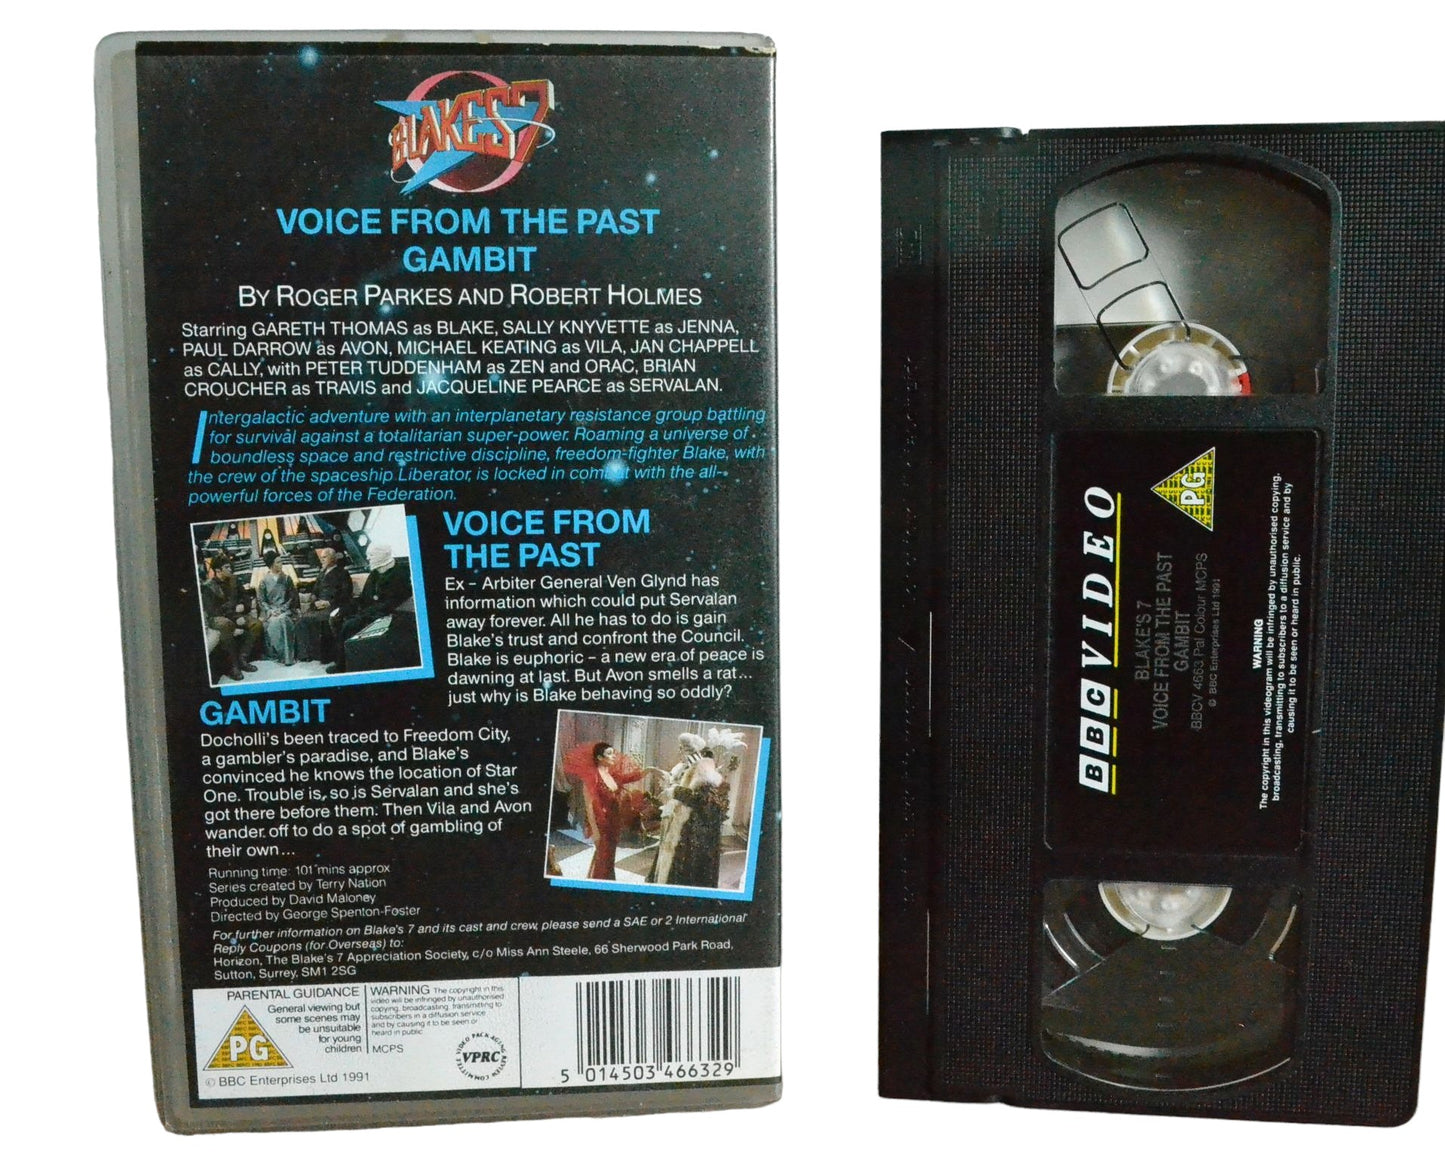 Blake's 7 : Voice From The Past / Gambit - Gareth Thomas - BBC Video - BBCV4663 - Sci-Fi - Pal - VHS-